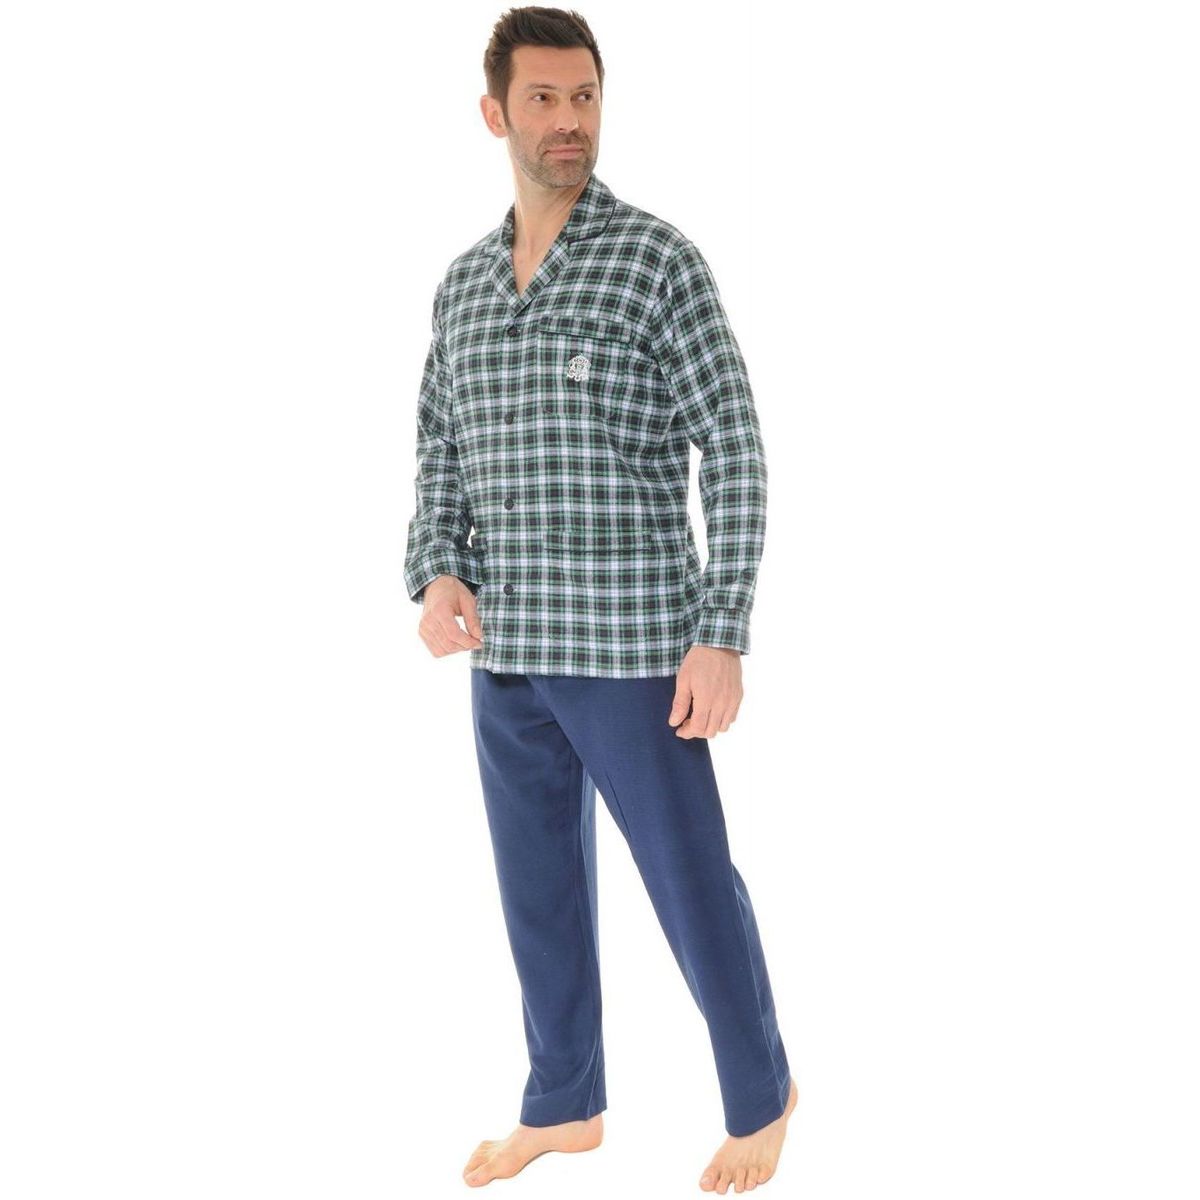 Vêtements Homme Pyjamas / Chemises de nuit Christian Cane SEYLAN Vert